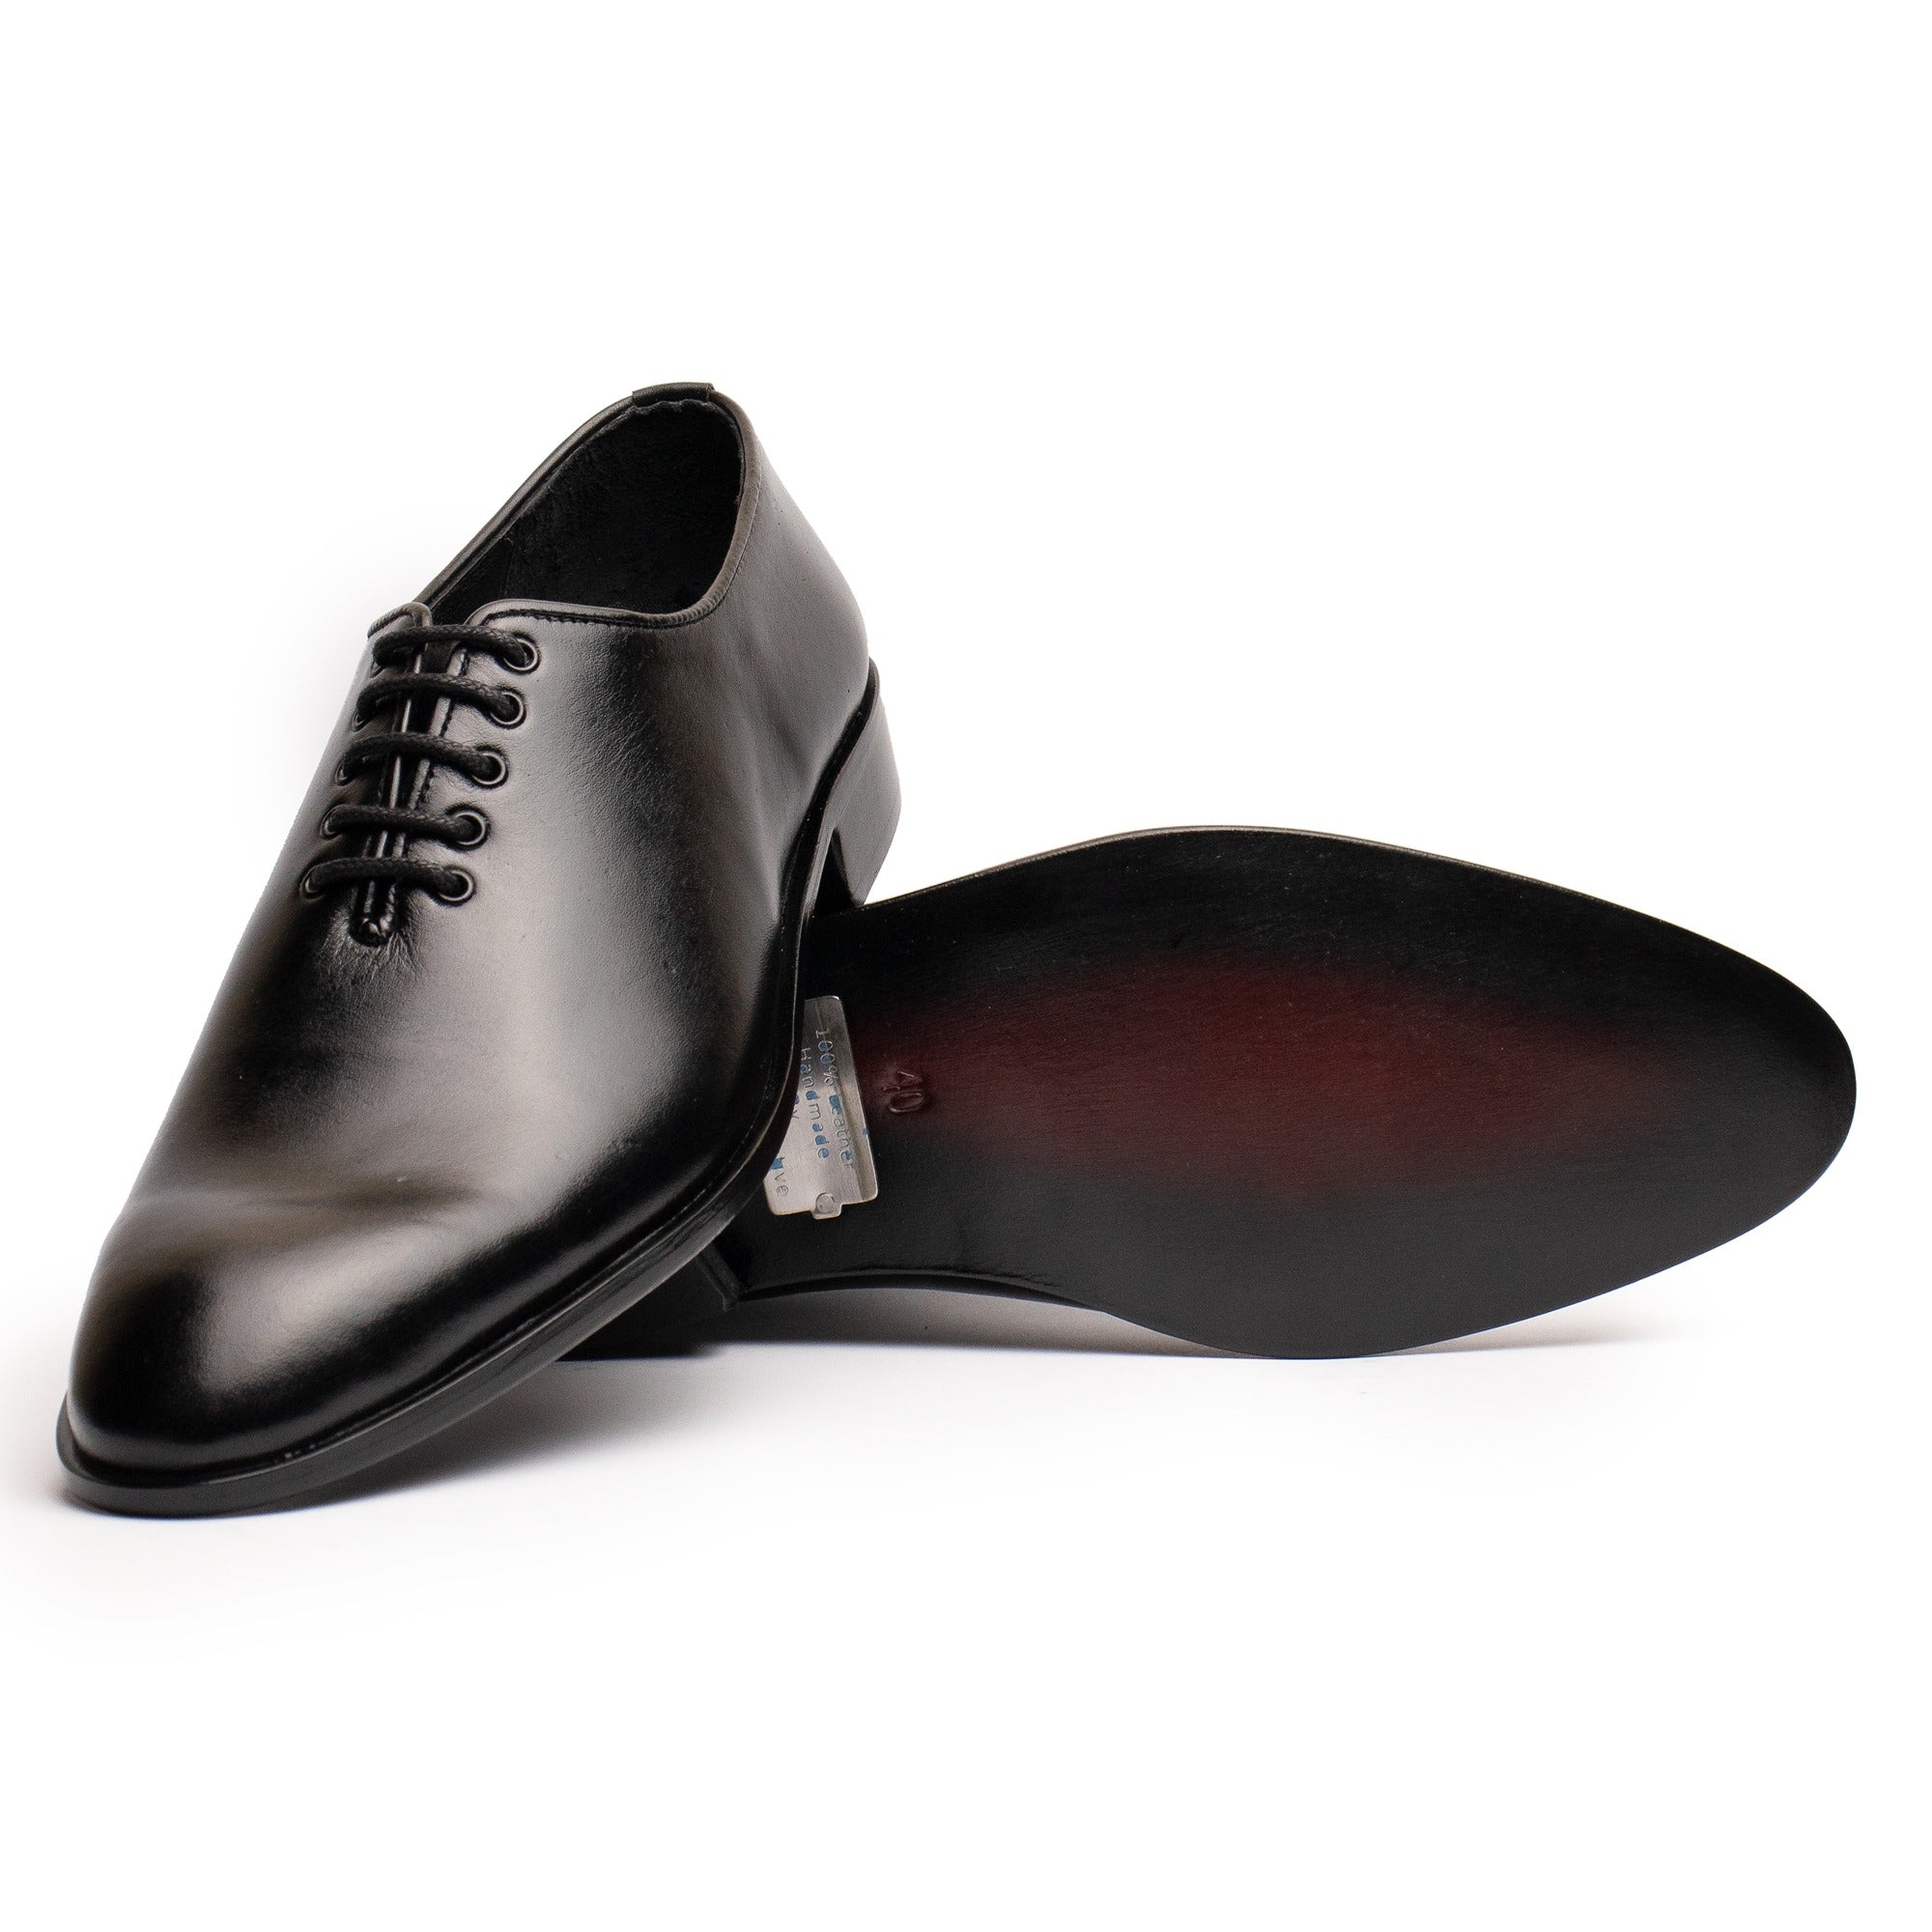 Whole cut plain Black - Premium shoes from royalstepshops - Just Rs.9000! Shop now at ROYAL STEP